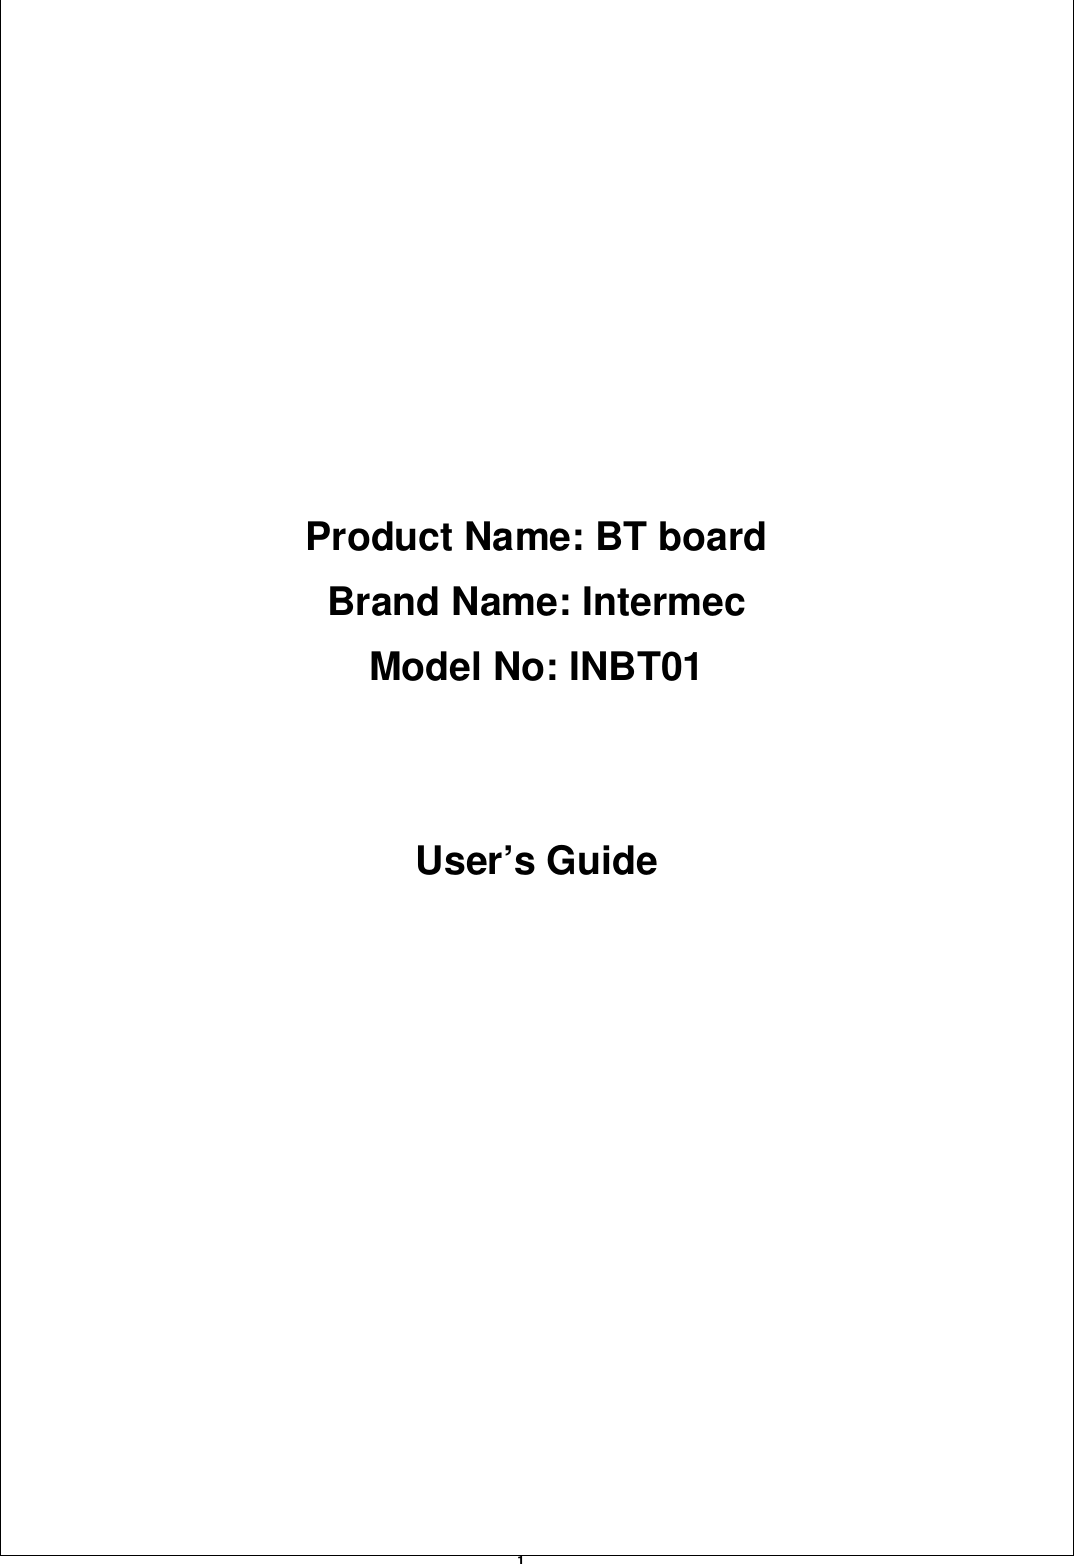  1                       Product Name: BT board Brand Name: Intermec Model No: INBT01   User’s Guide     